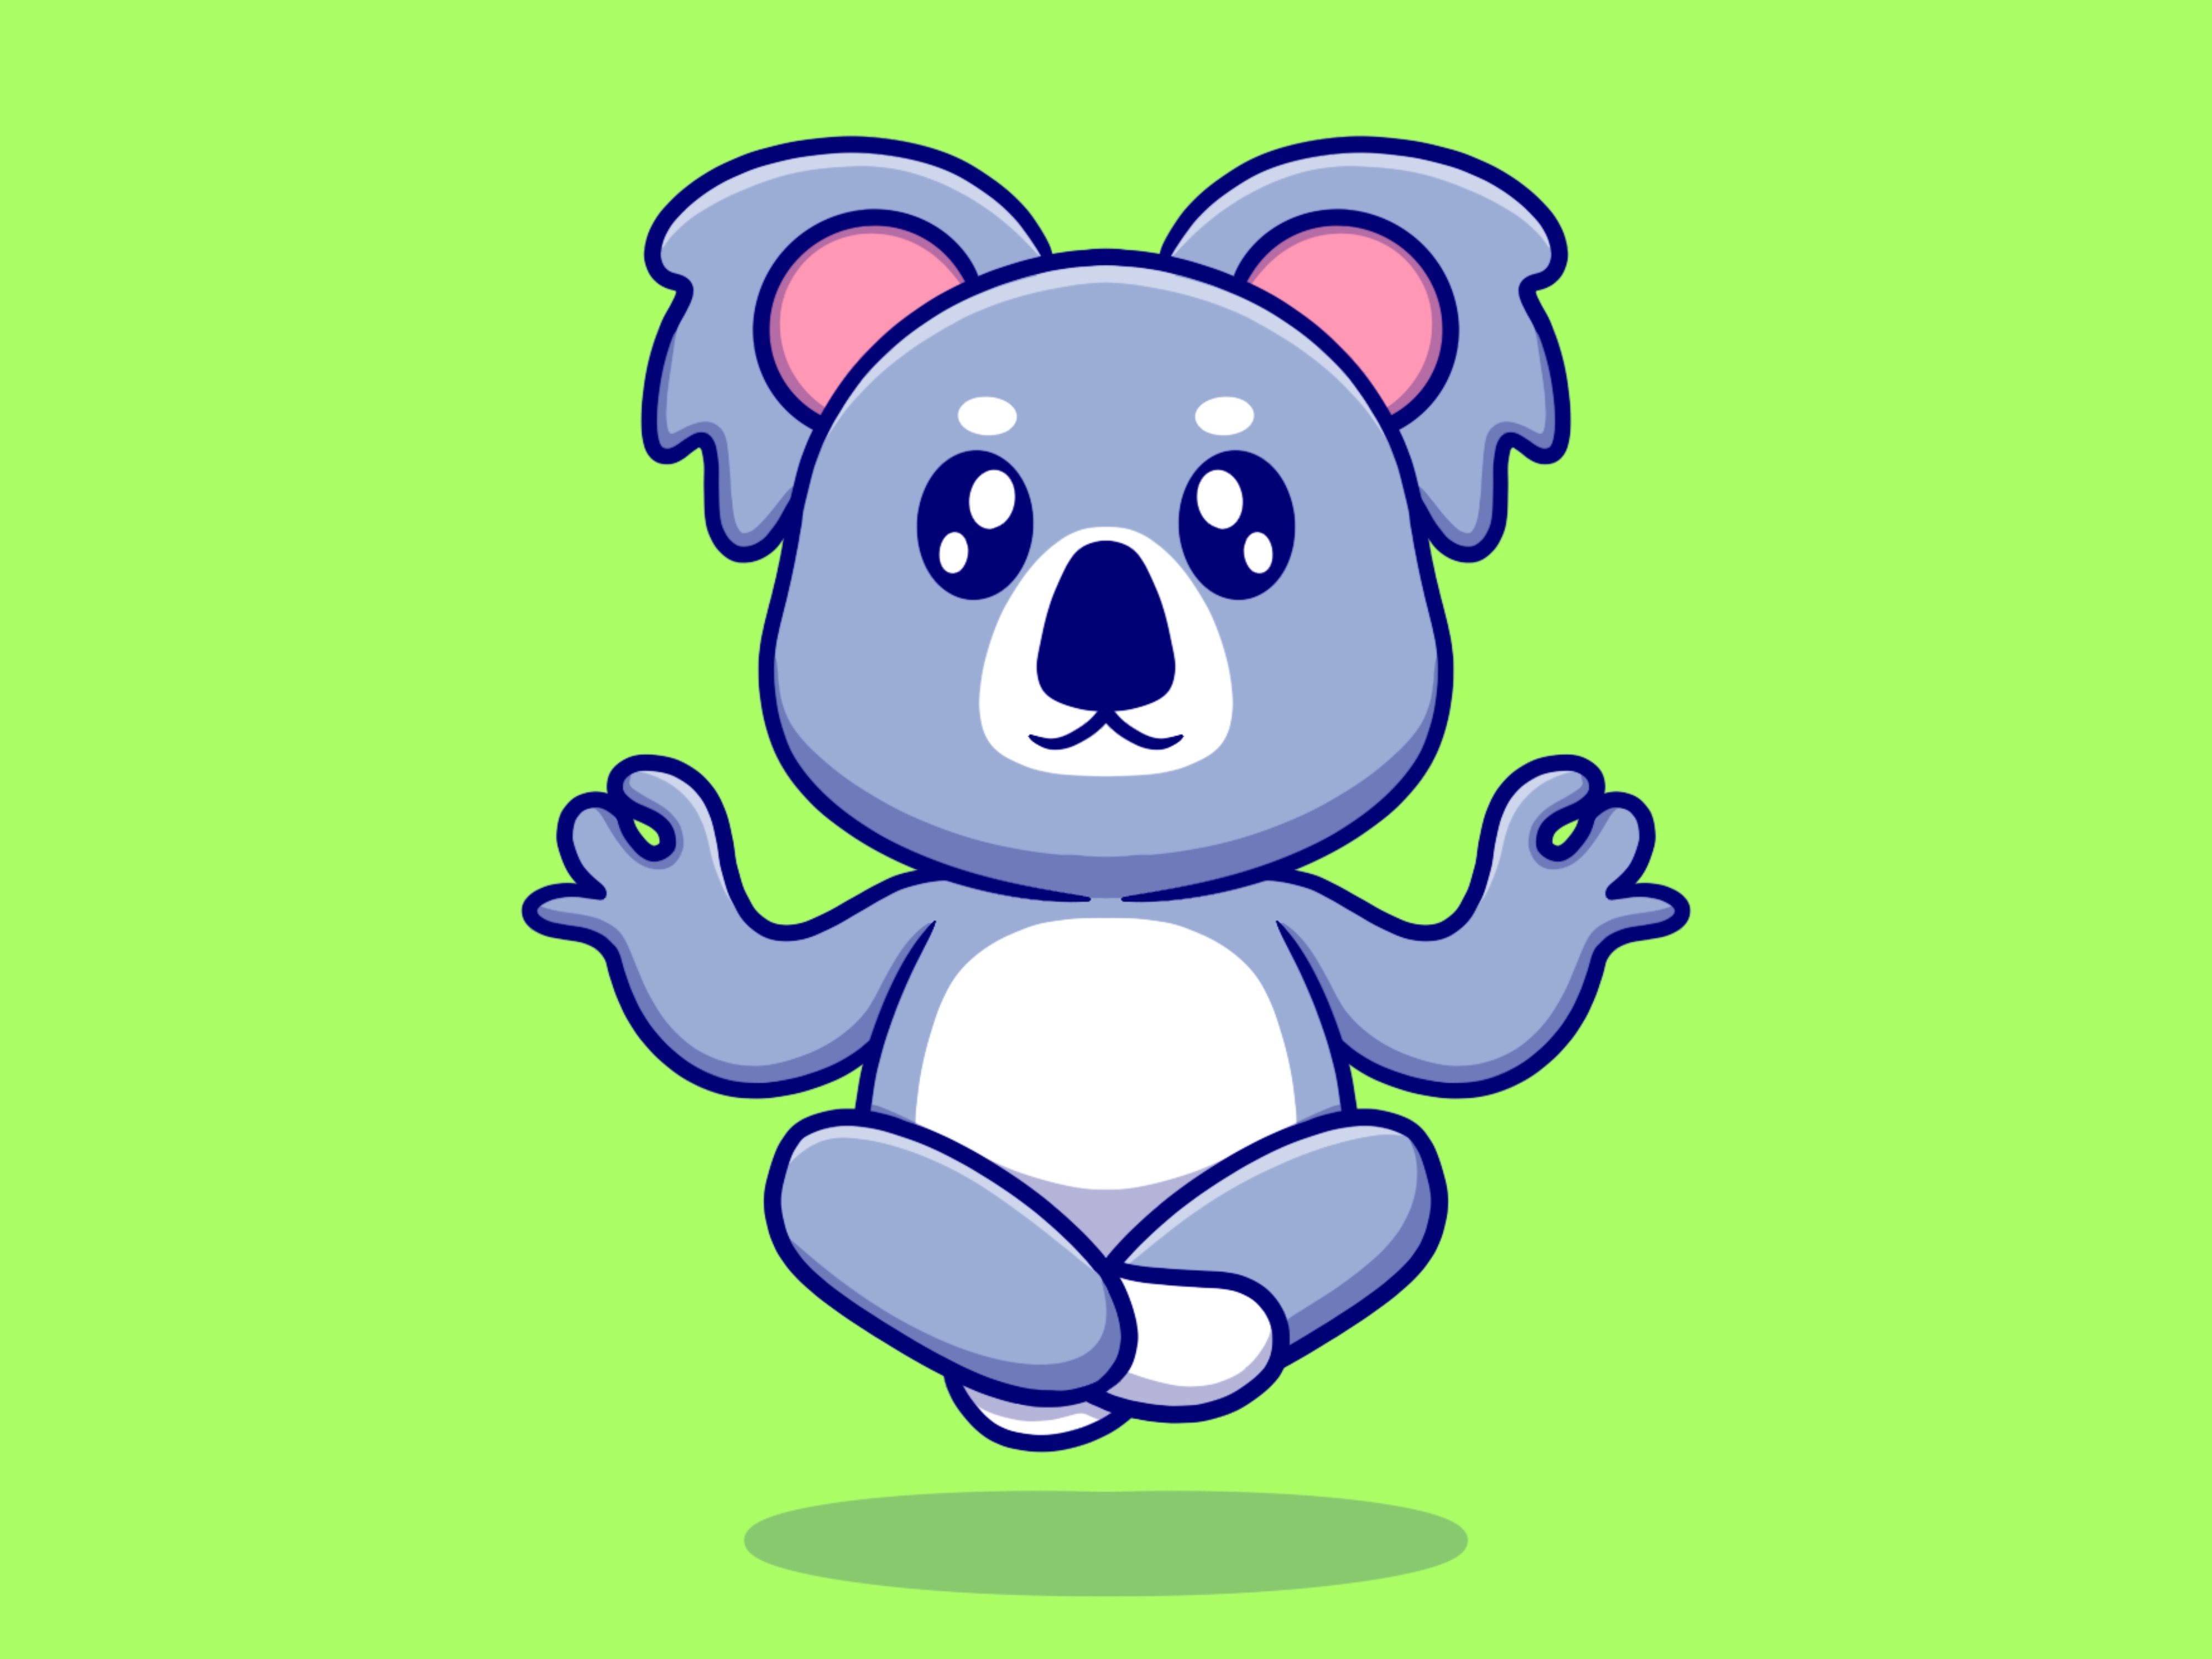 Cute koala cartoon illustration by NOCTE STUDIO on Dribbble